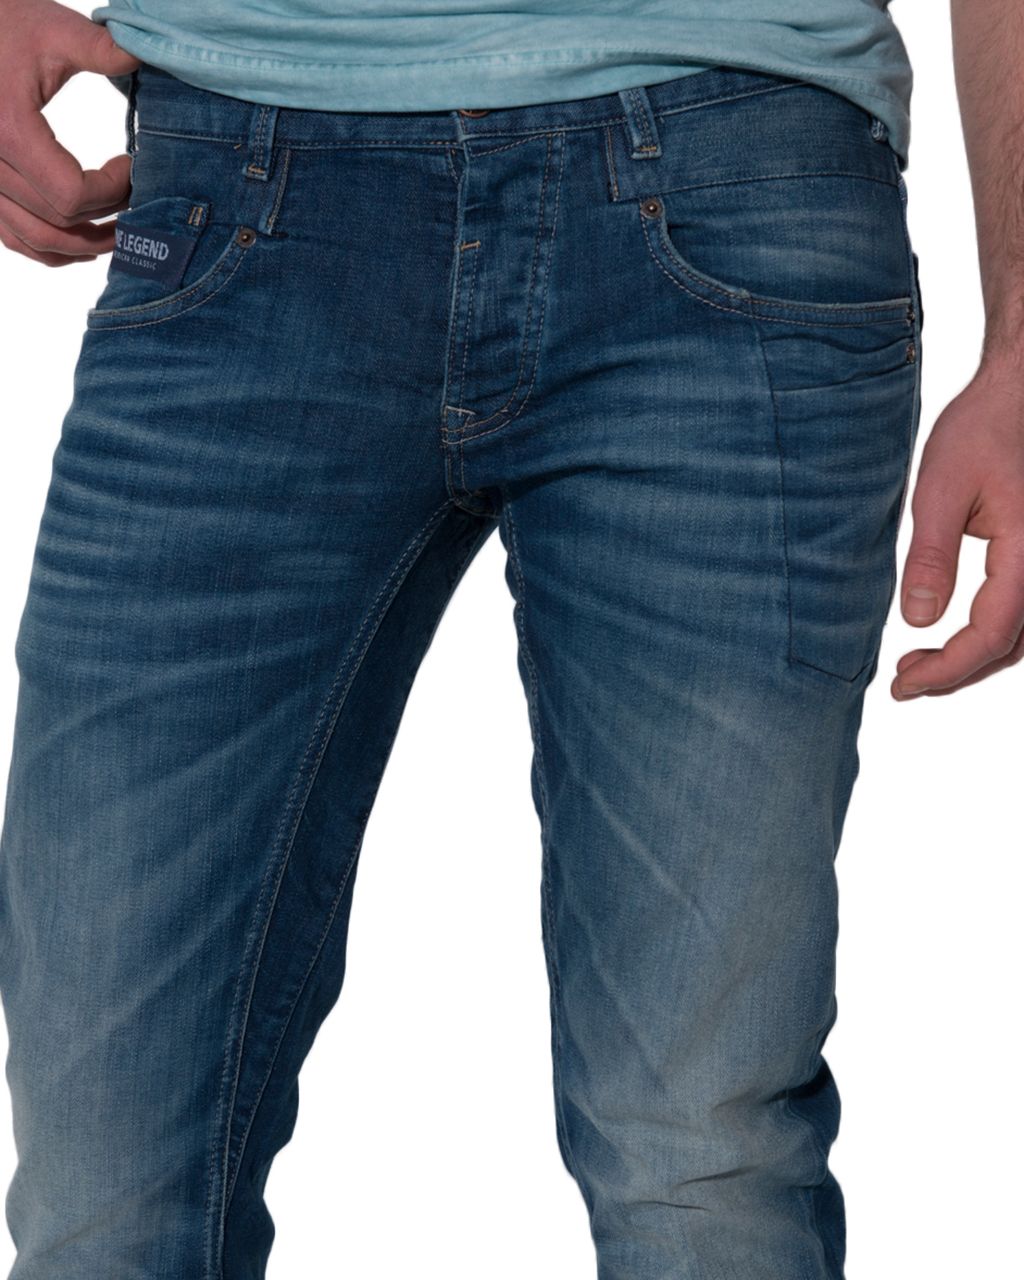 haspel pop voorzetsel PME Legend Commander 2 Jeans | Shop nu - Only for Men